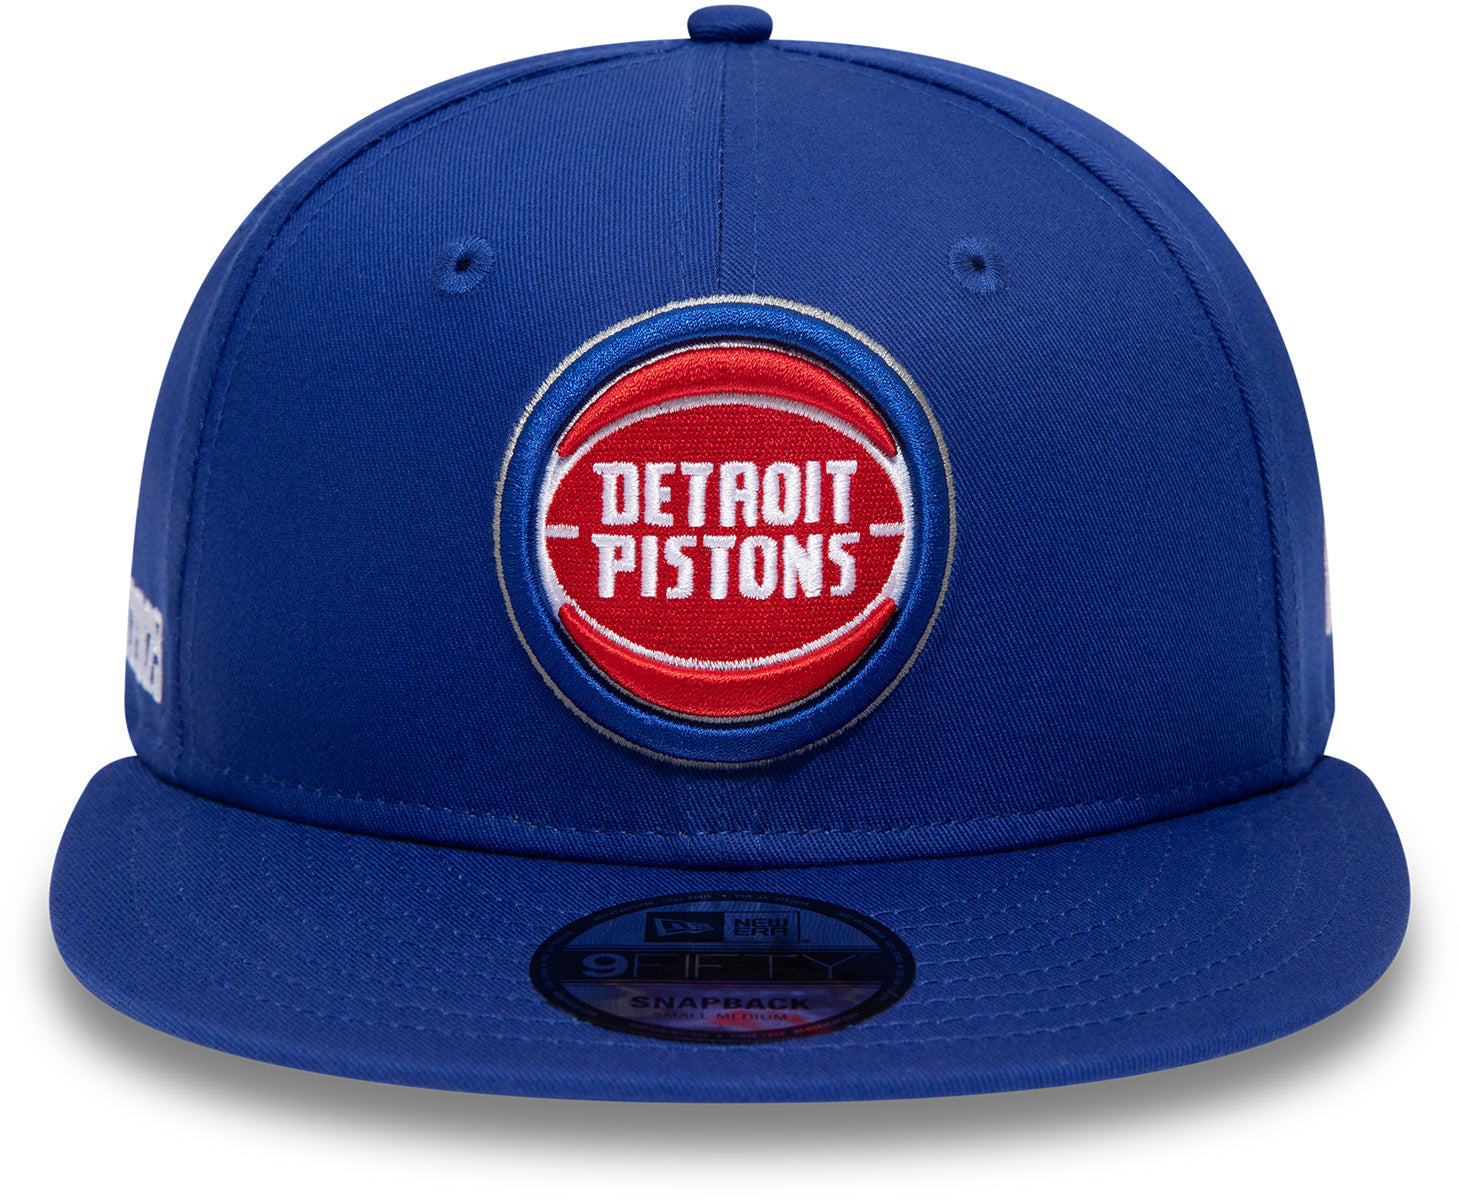 Detroit Pistons STATEMENT SNAPBACK Grey Hat by New Era